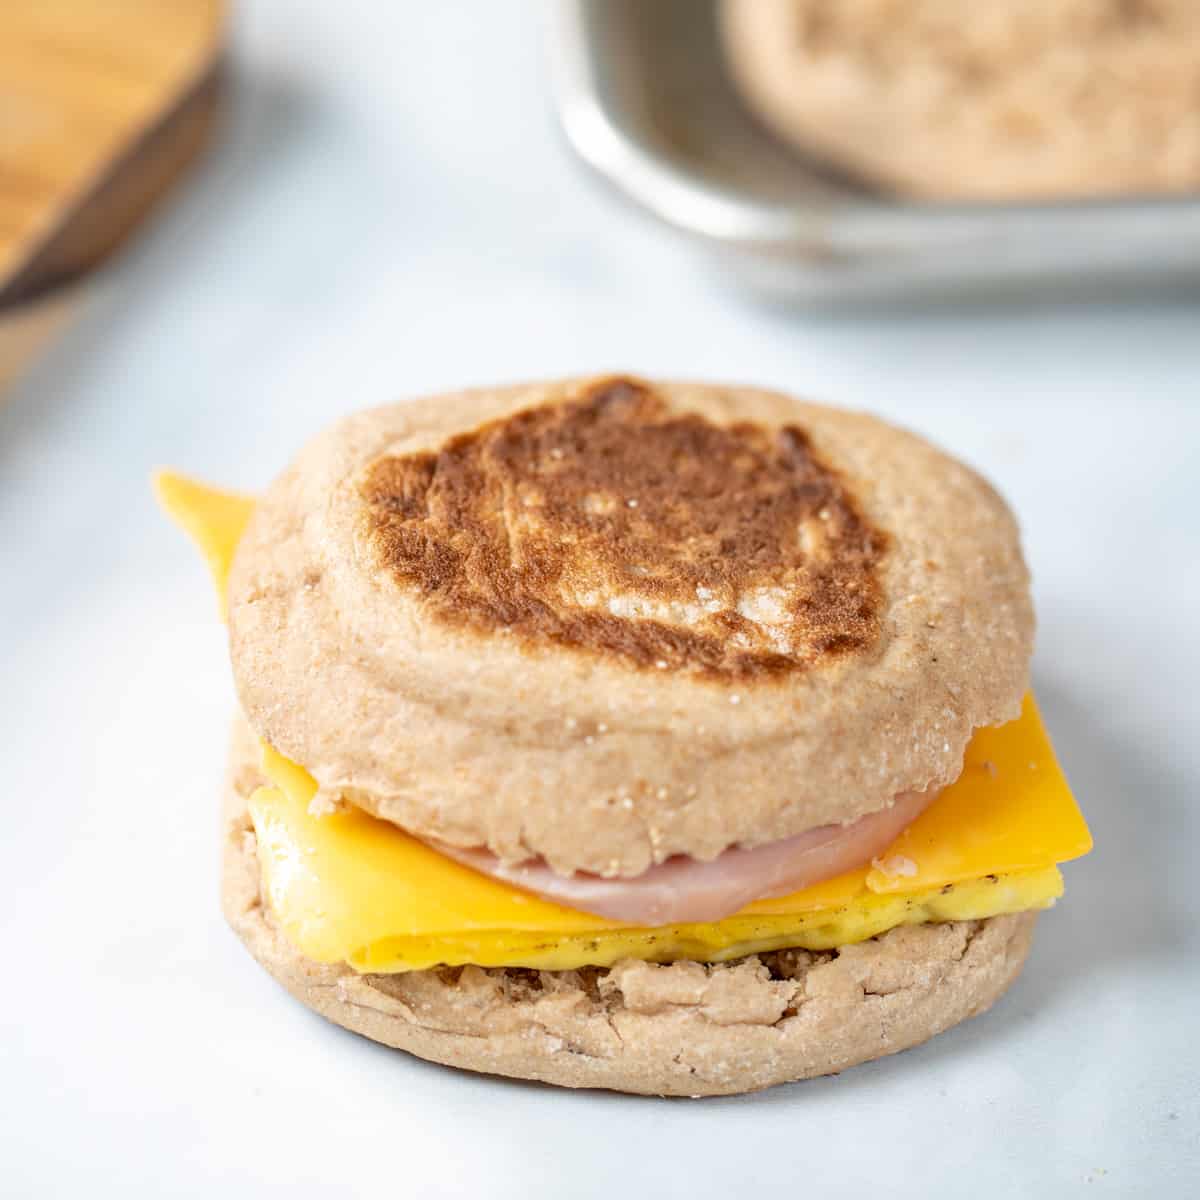 Make Ahead Breakfast Sandwiches - BEST ever! - Happy Money Saver